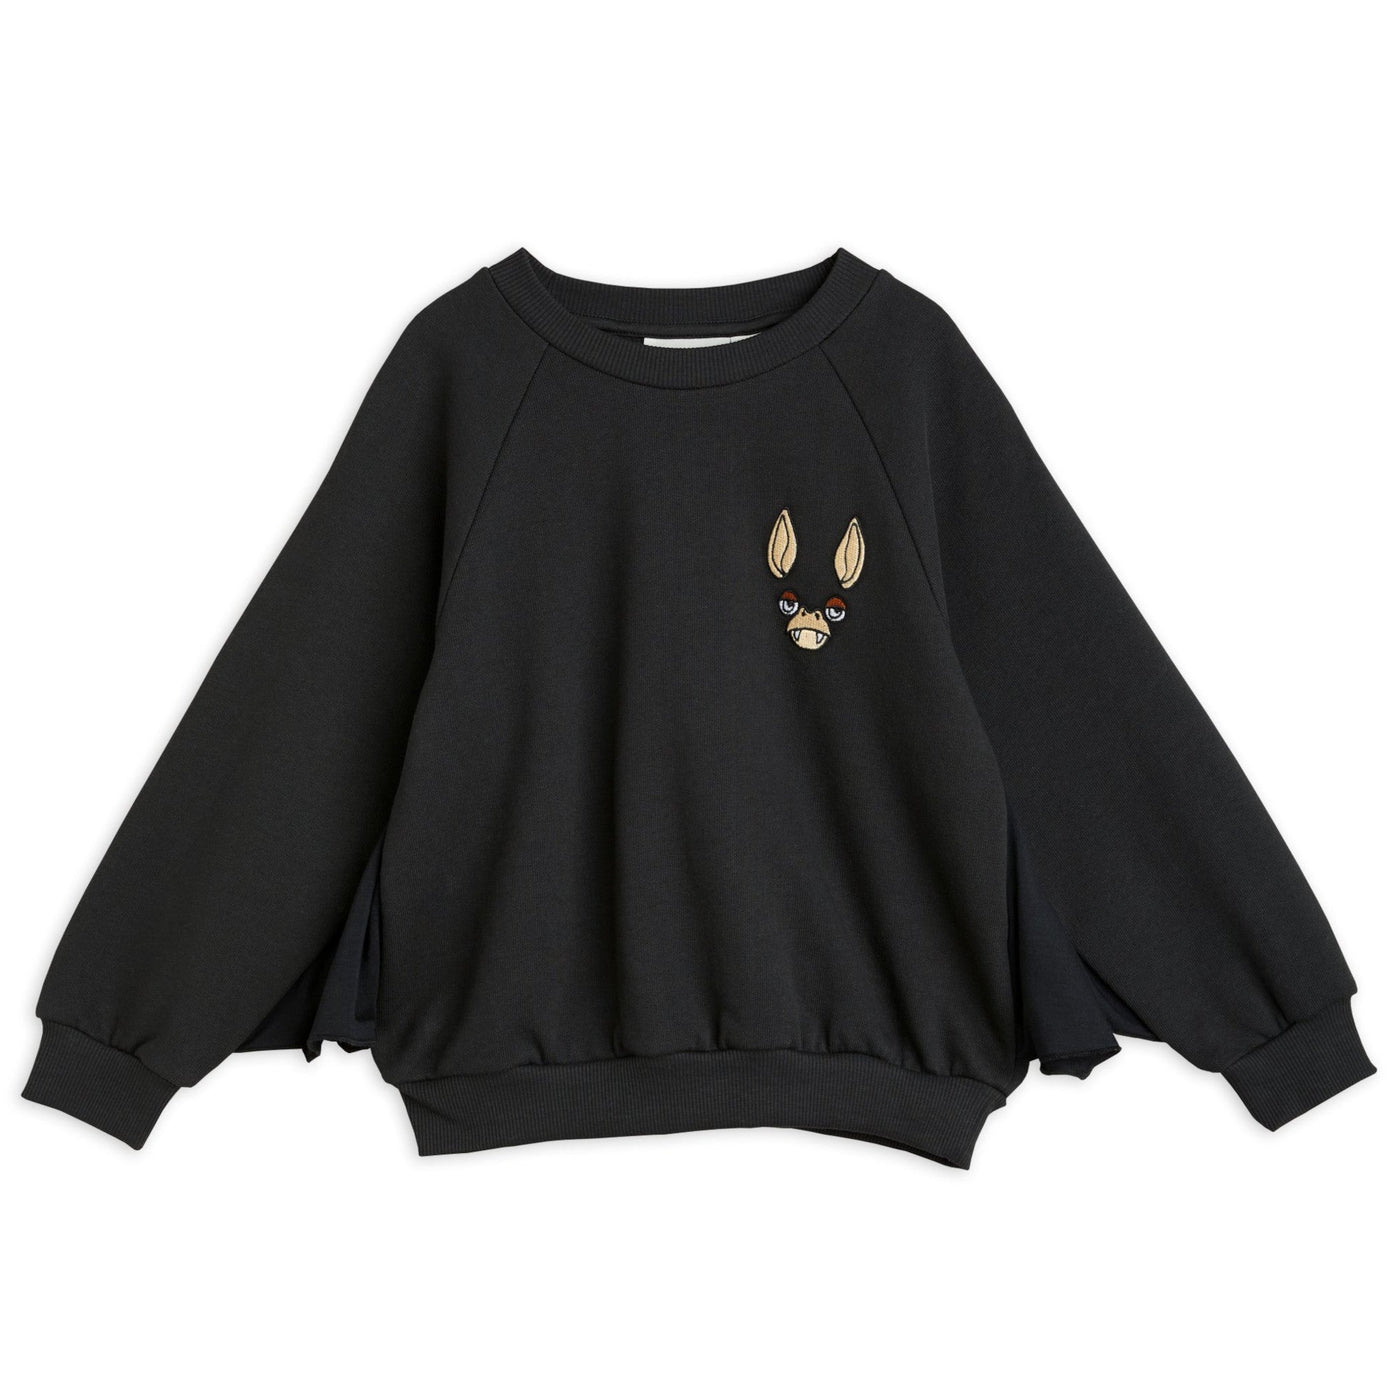 Bat Winged Sweatshirt by Mini Rodini - Petite Belle